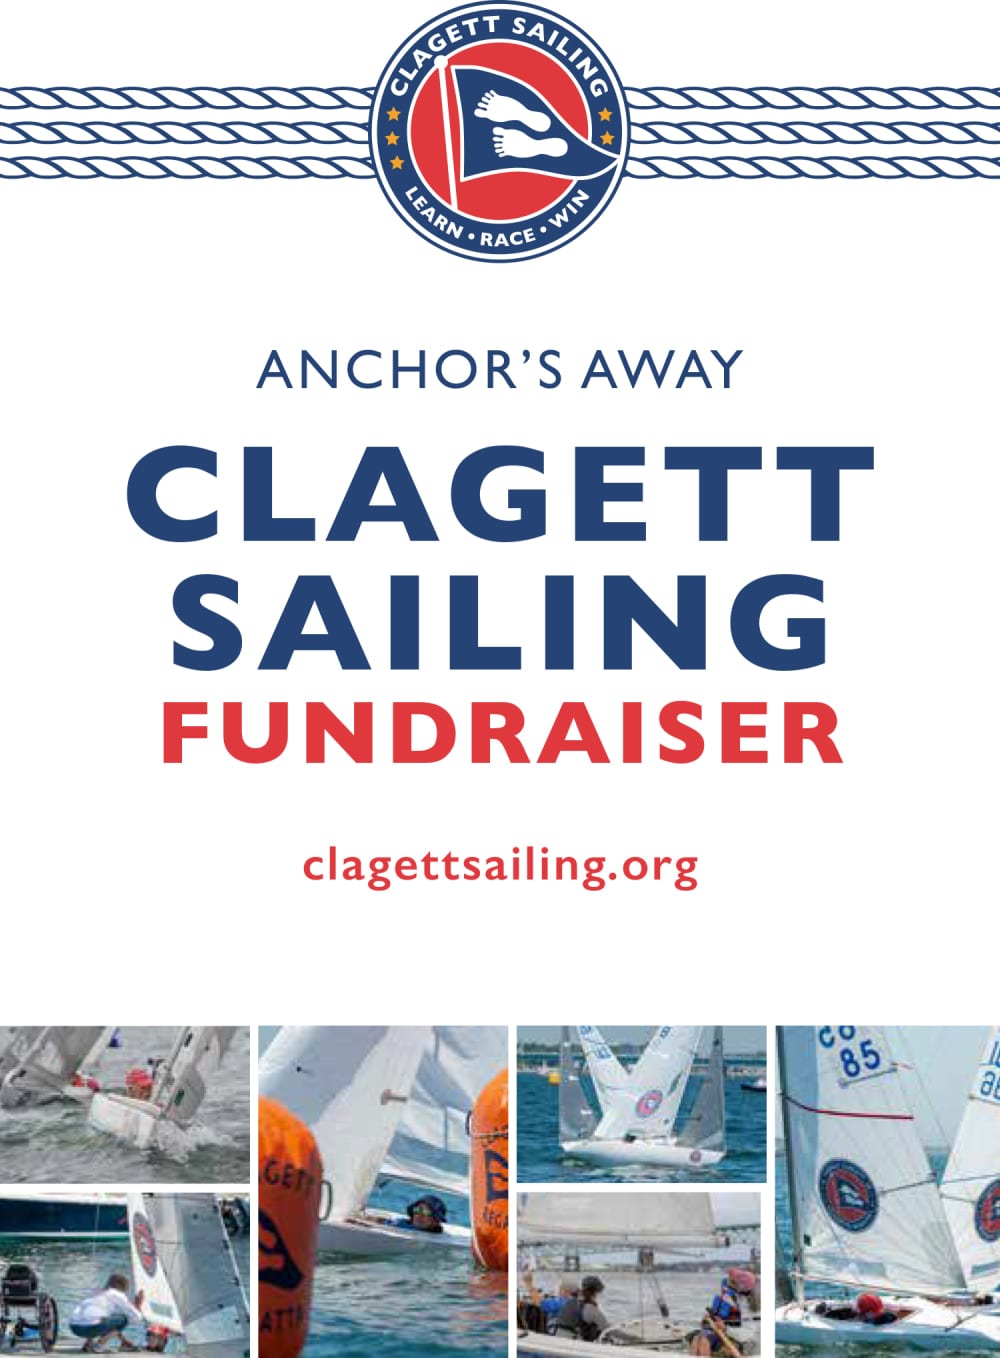 20 years of Clagett Sailing